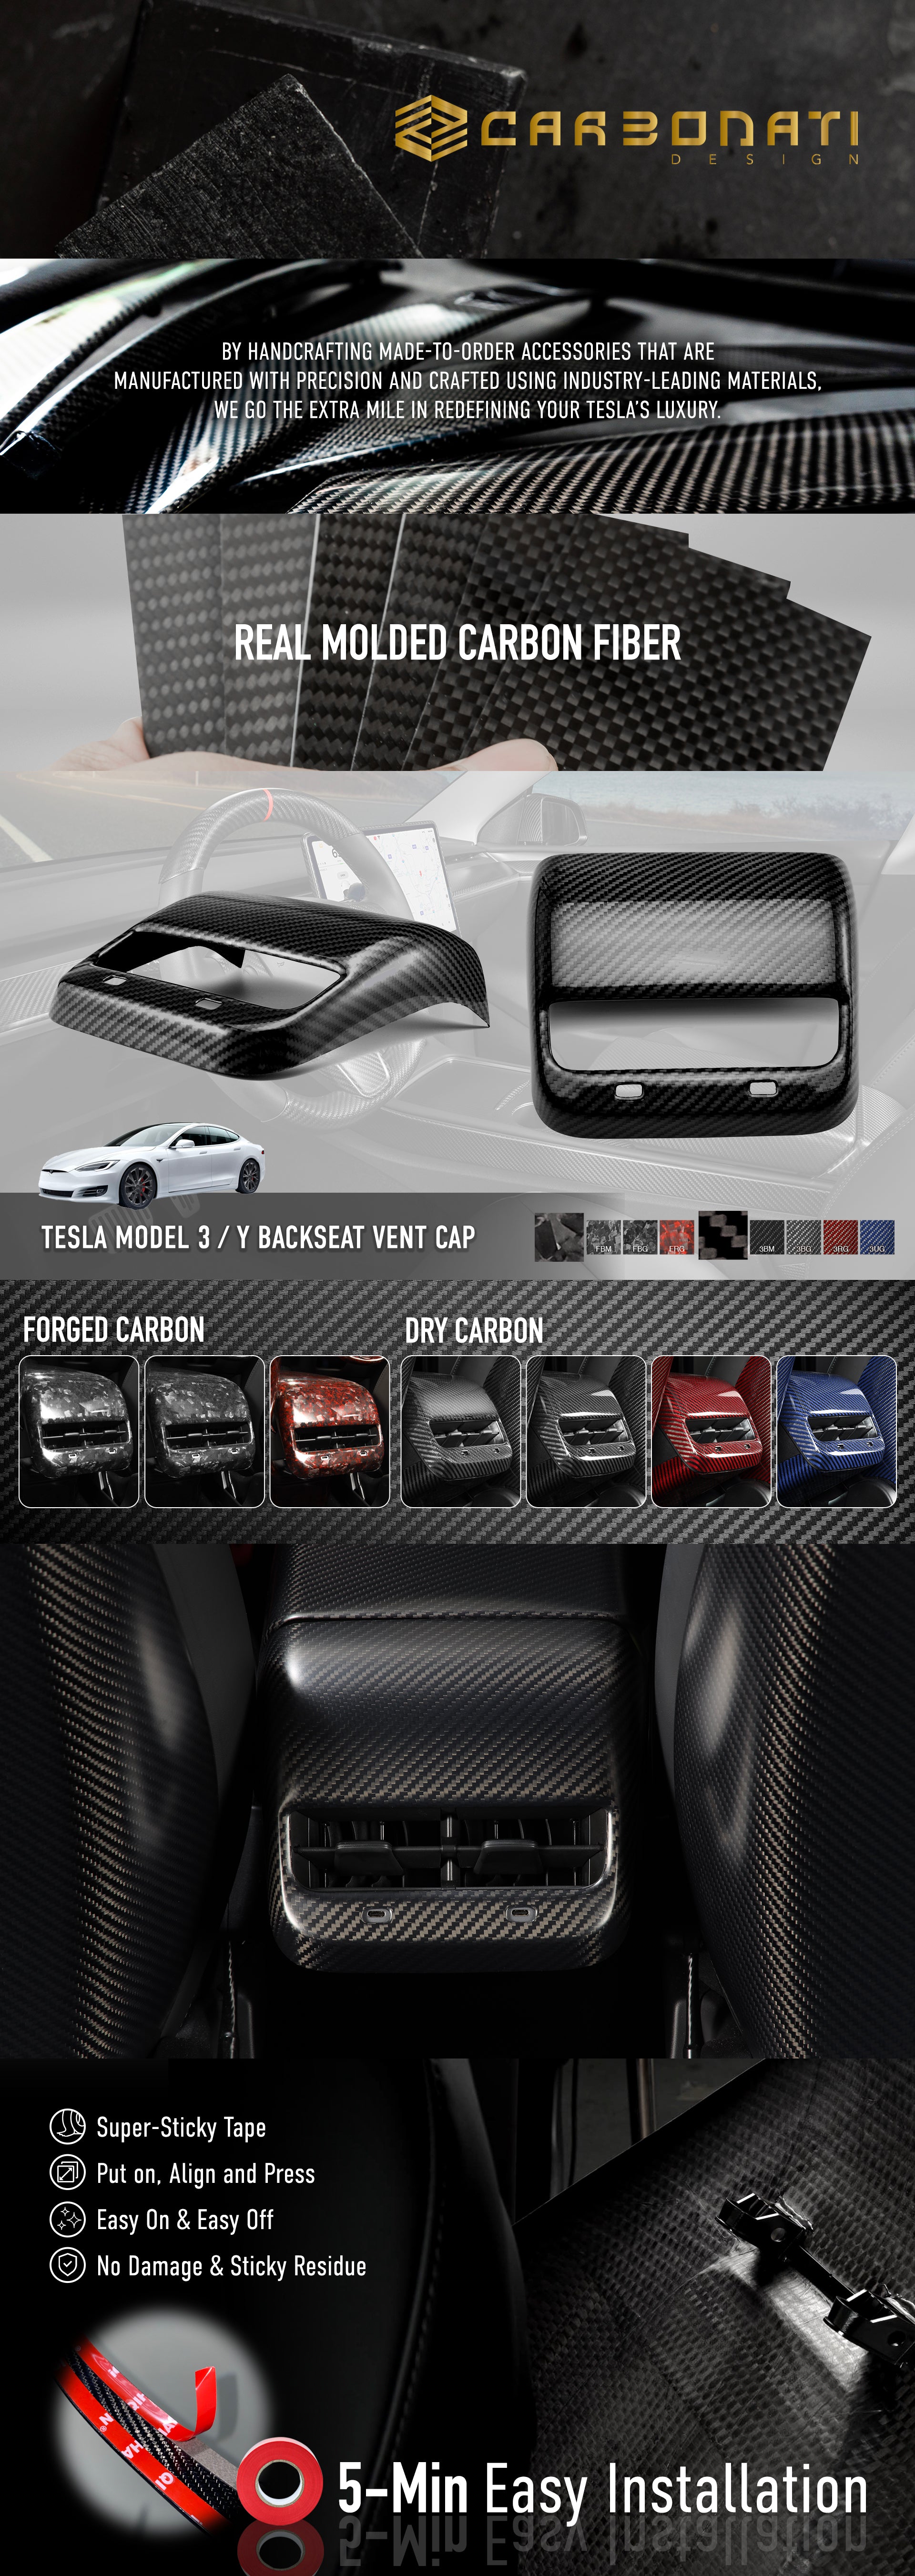 Tesla Model 3 / Y Backseat Vent Cap-REAL MOLDED CARBON FIBER – CARBONATI USA